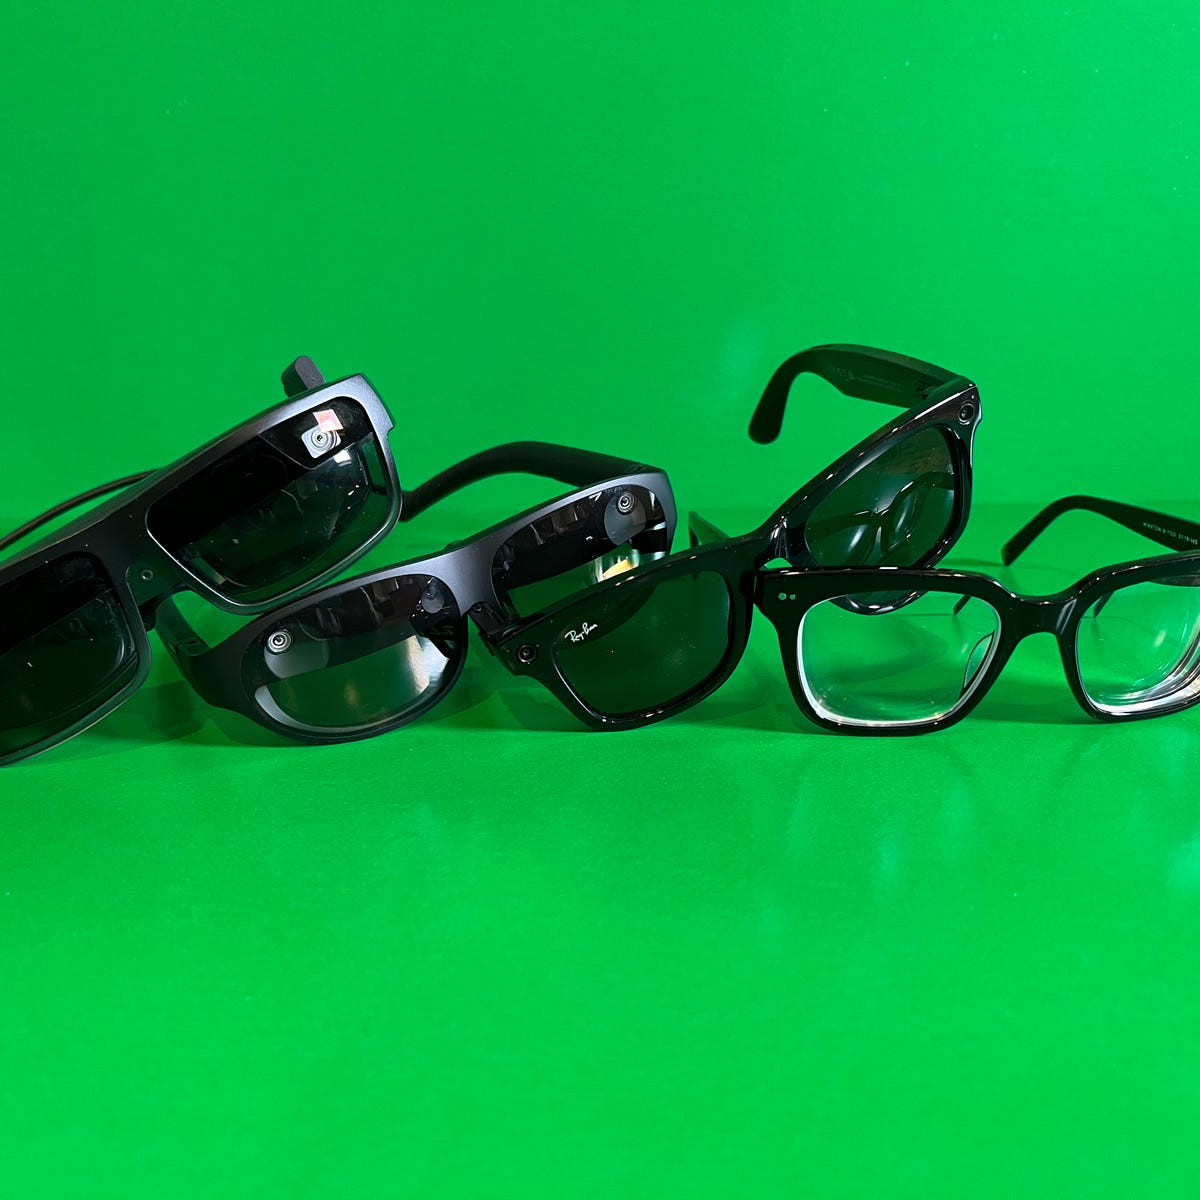 Anti-Reflective Coating on Prescription Glasses